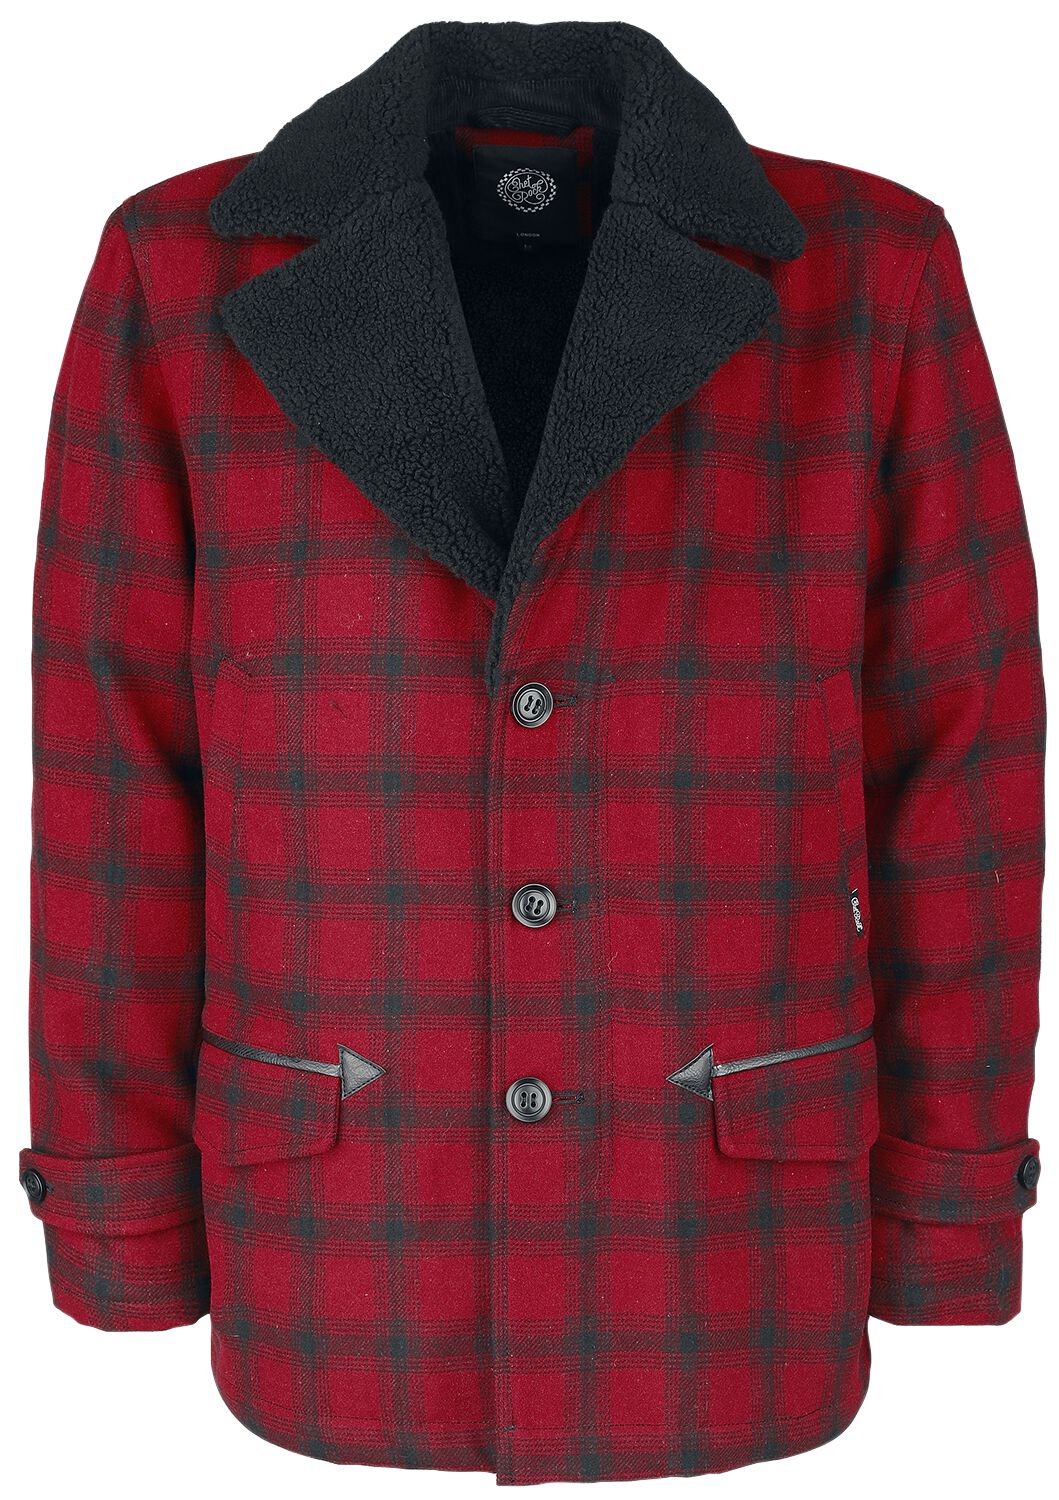 Kurt Lumberjack Coat Winterjacke rot/schwarz von Chet Rock